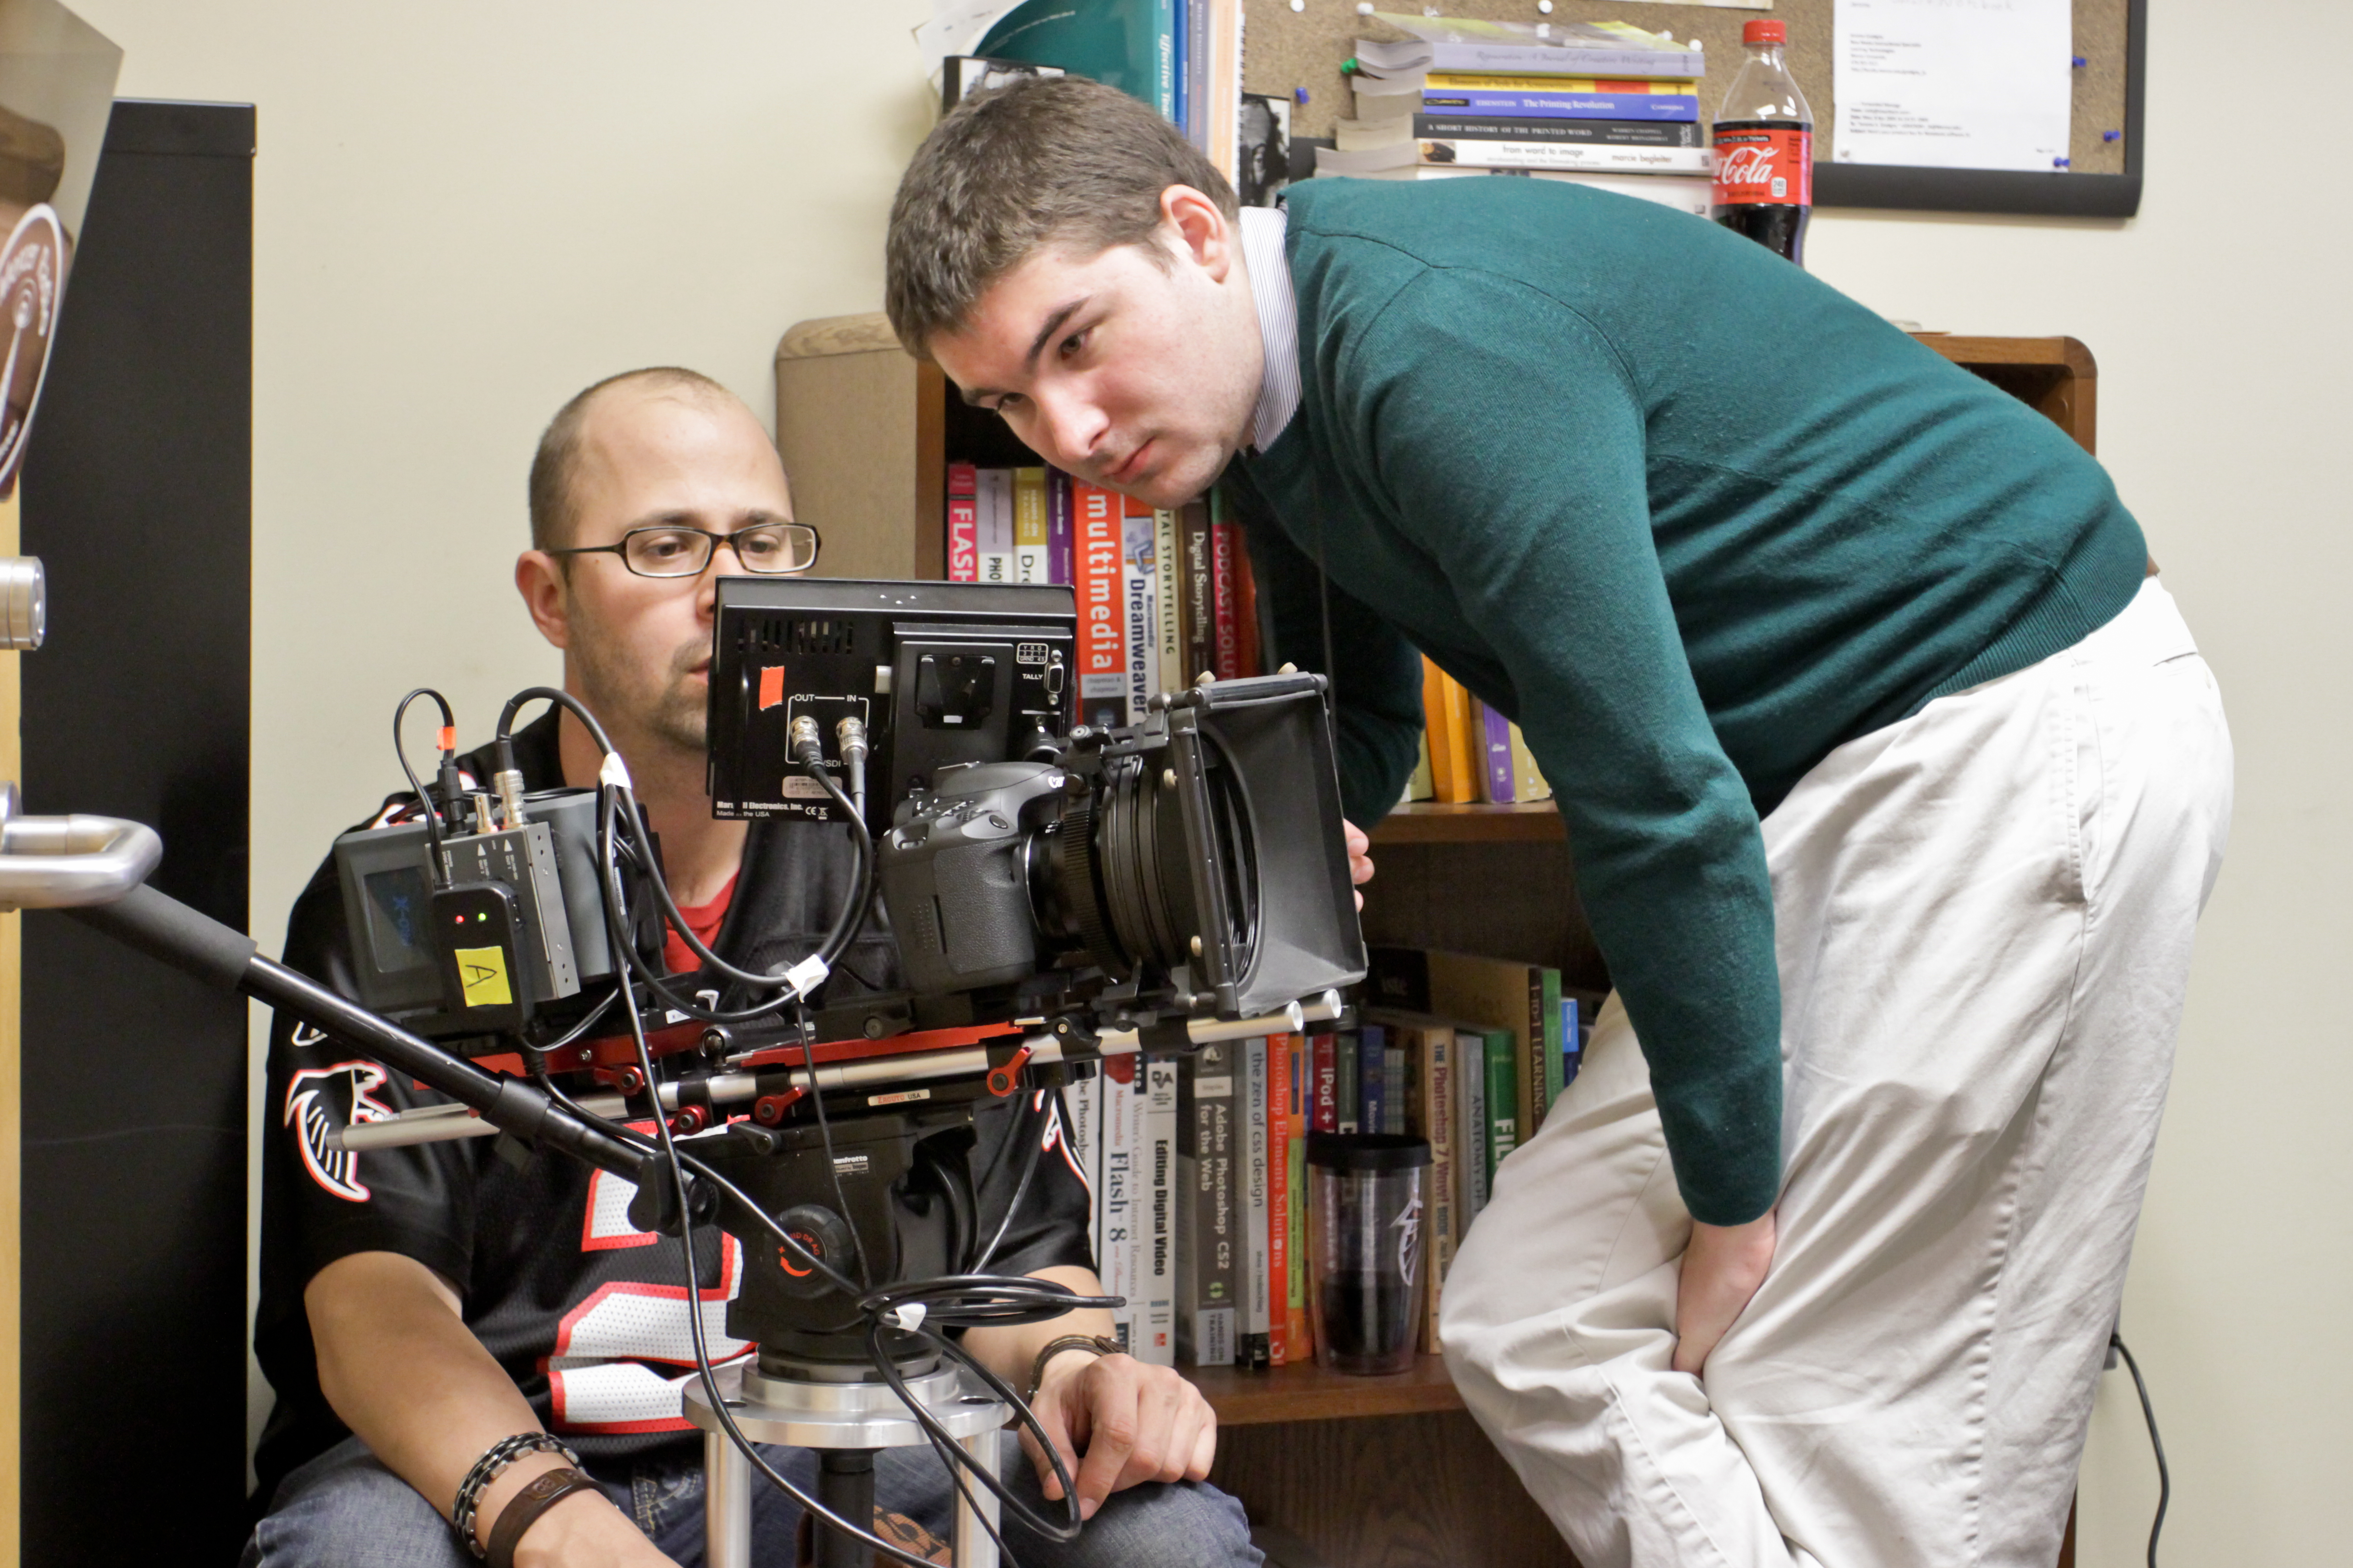 Director James Kicklighter reviews the shot with FOLLOWED Director of Photography Jason Winn.